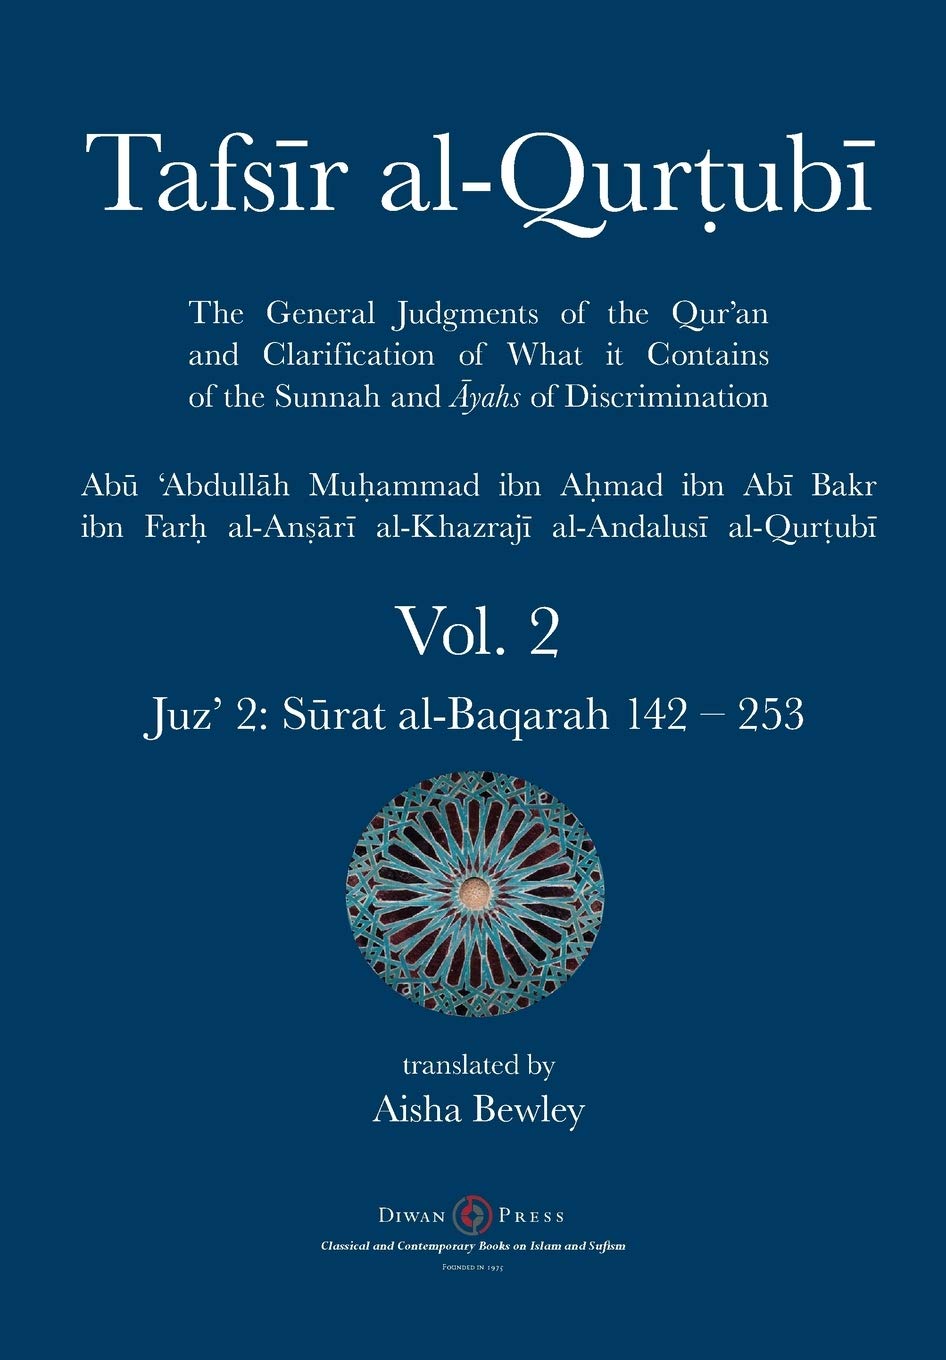 Tafsir al-Qurtubi Vol. 2: Juz' 2: Sūrat al-Baqarah 142 - 253 - Abu 'Abdullah Muhammad Al-Qurtubi (Author), Abdalhaqq Bewley (Editor), Aisha Abdurrahman Bewley (Translator)